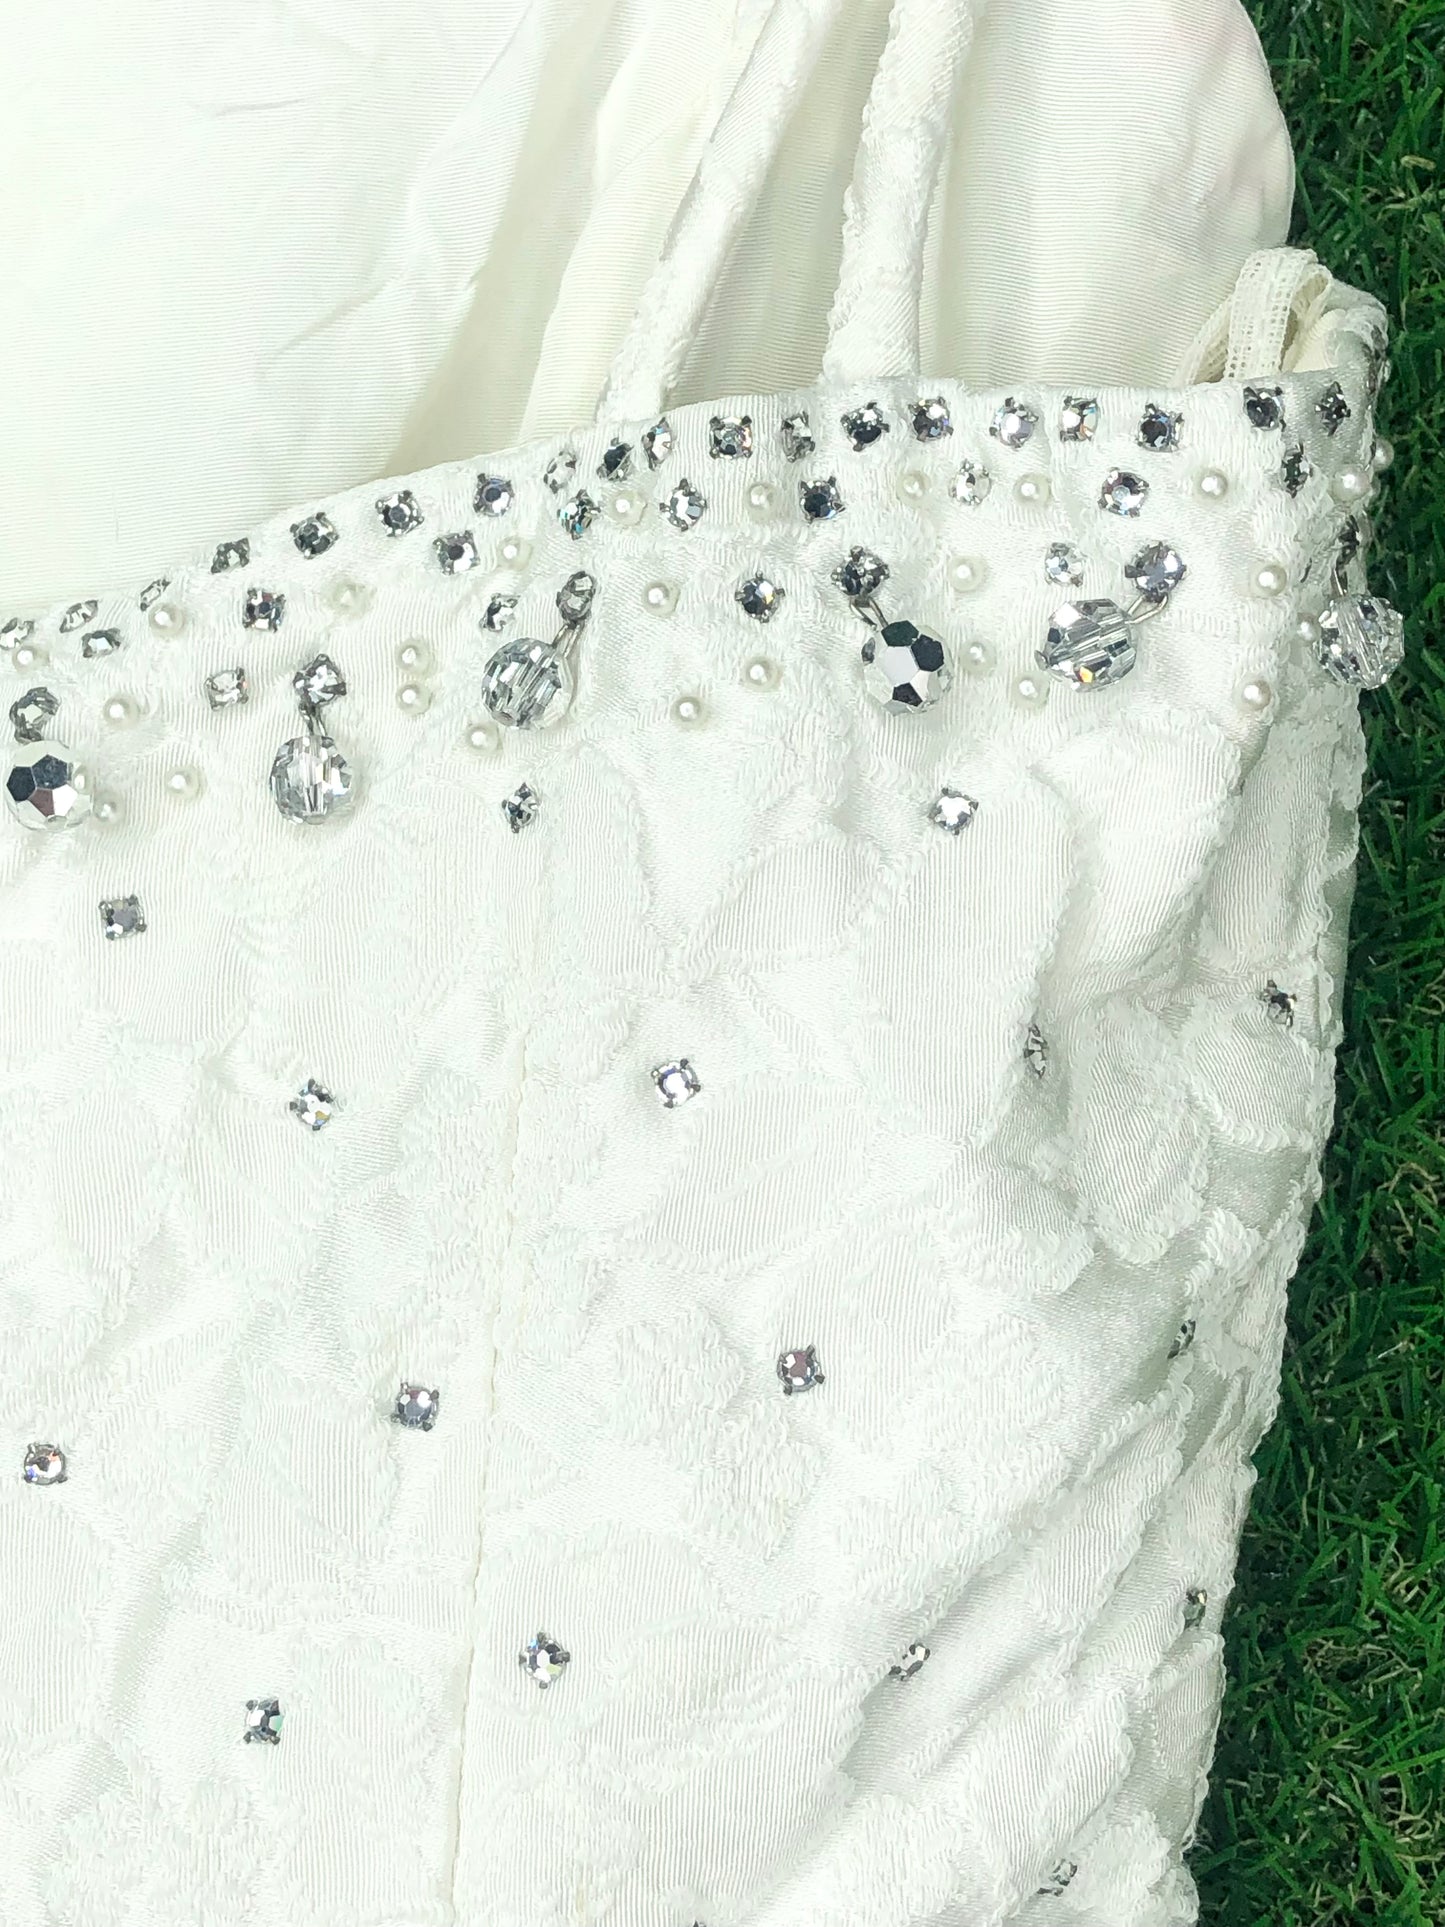 1950's Grace Kelly-Worthy White Rhinestone Wedding Day Party Dress